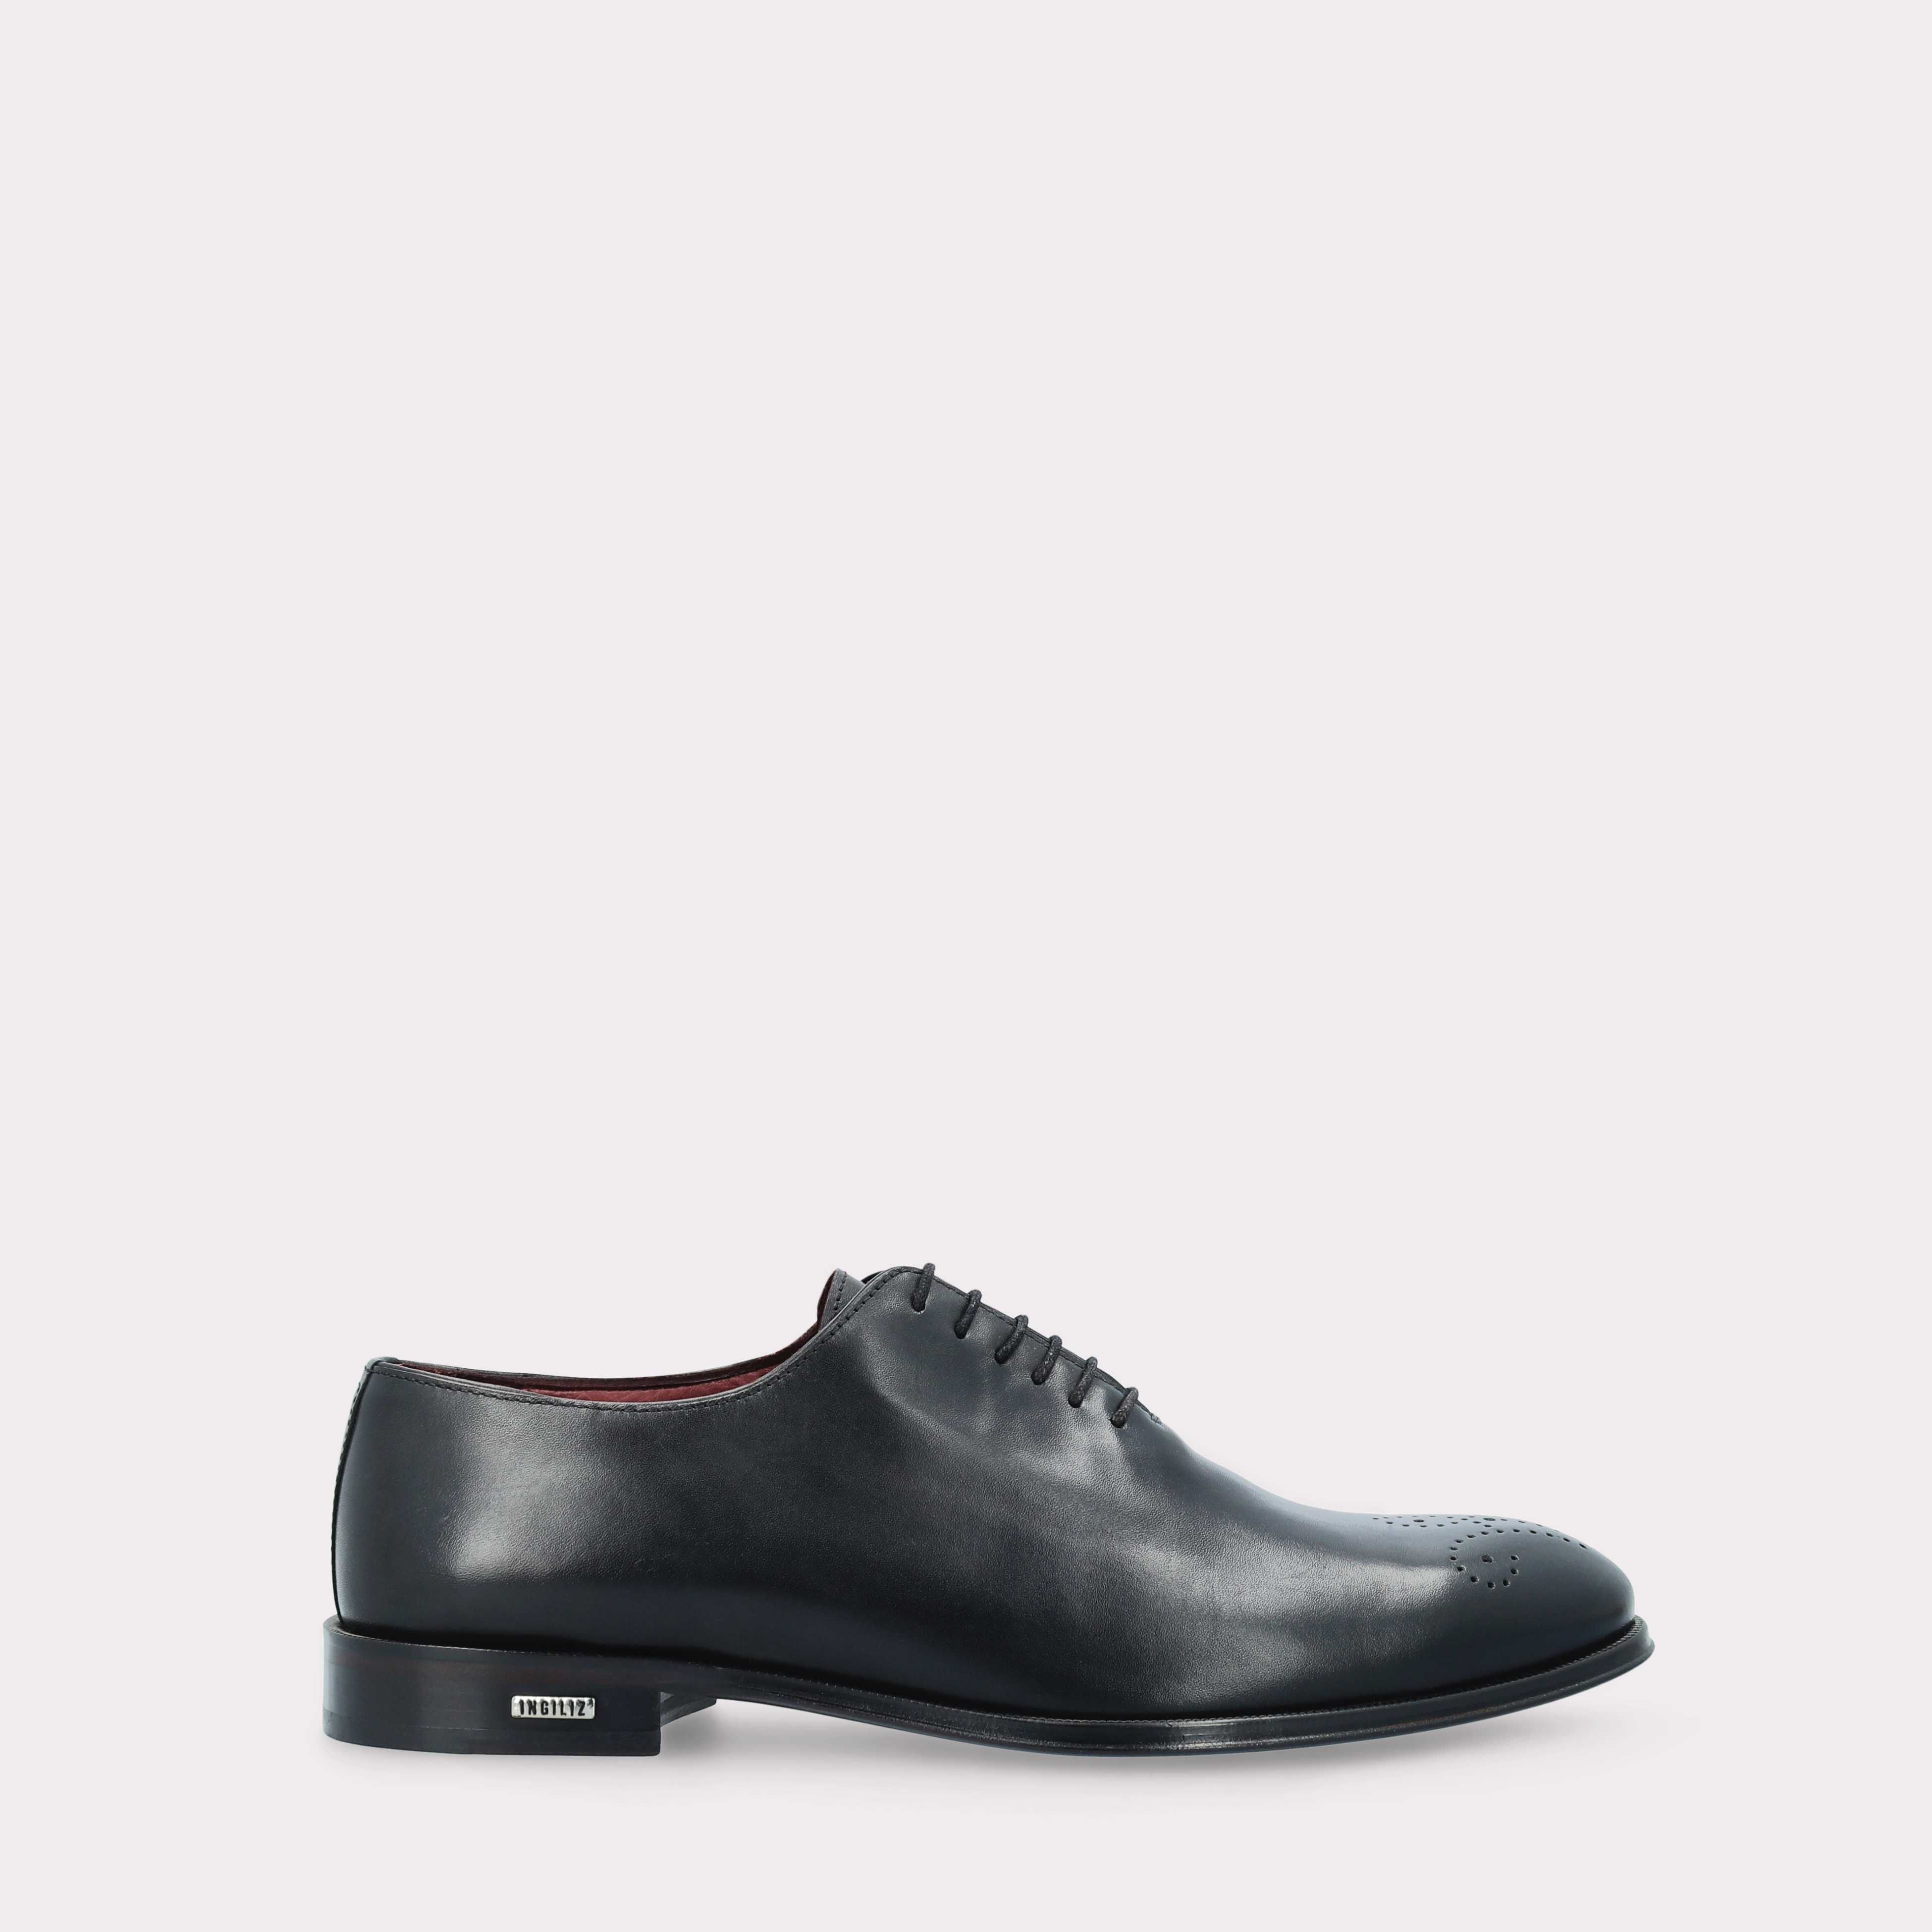 PRATO 01 black leather  oxford shoes